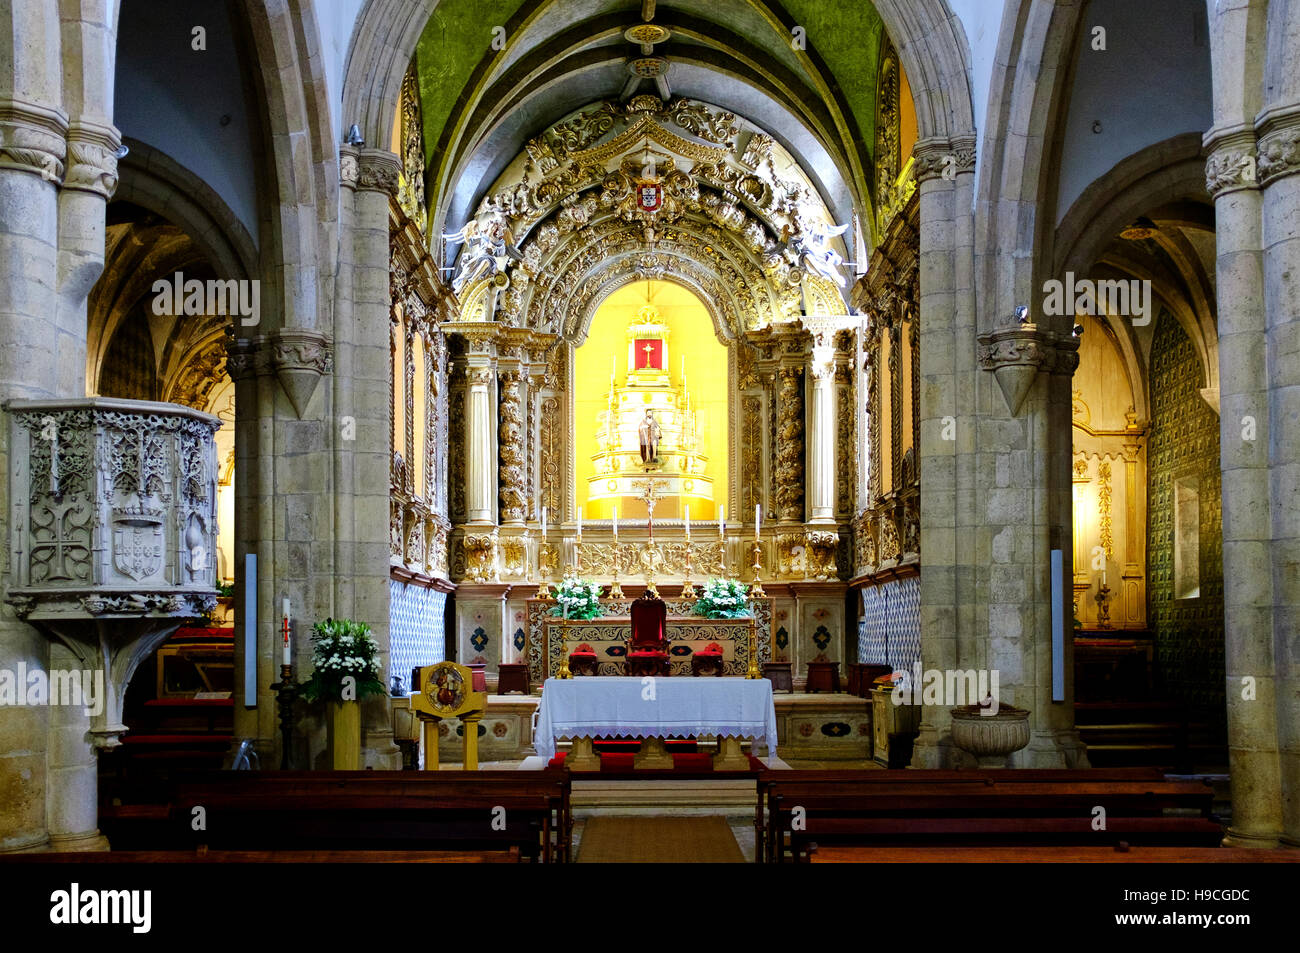 Altar of the Igreja de Sao Joao Baptista. Tomar, Portugal Stock Photo